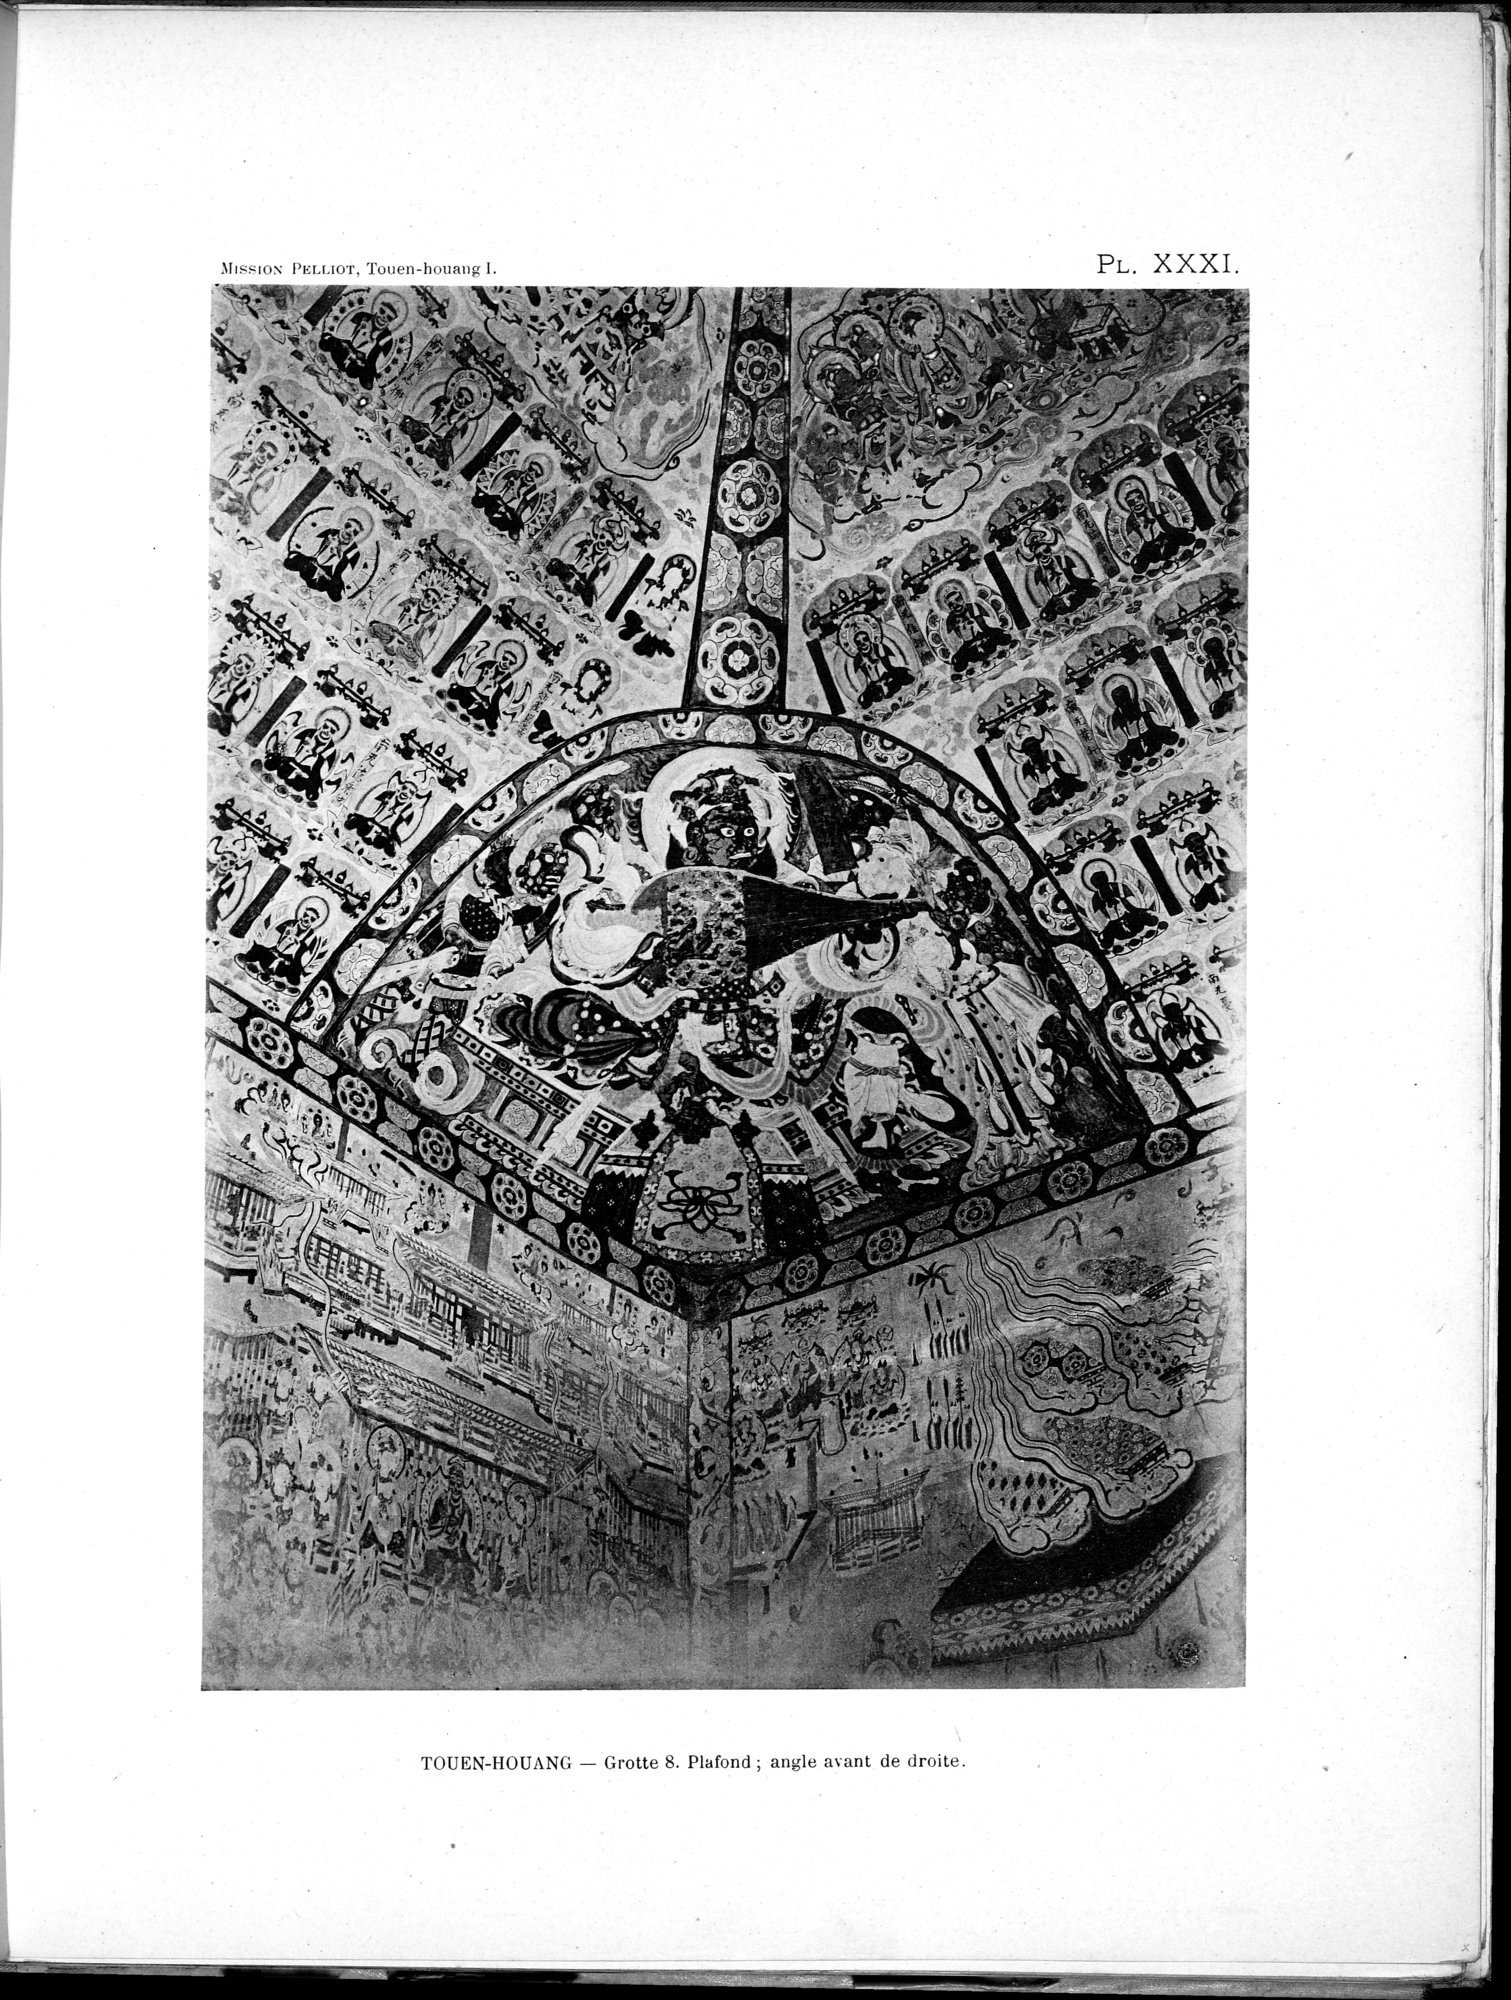 Les grottes de Touen-Houang : vol.1 / Page 75 (Grayscale High Resolution Image)